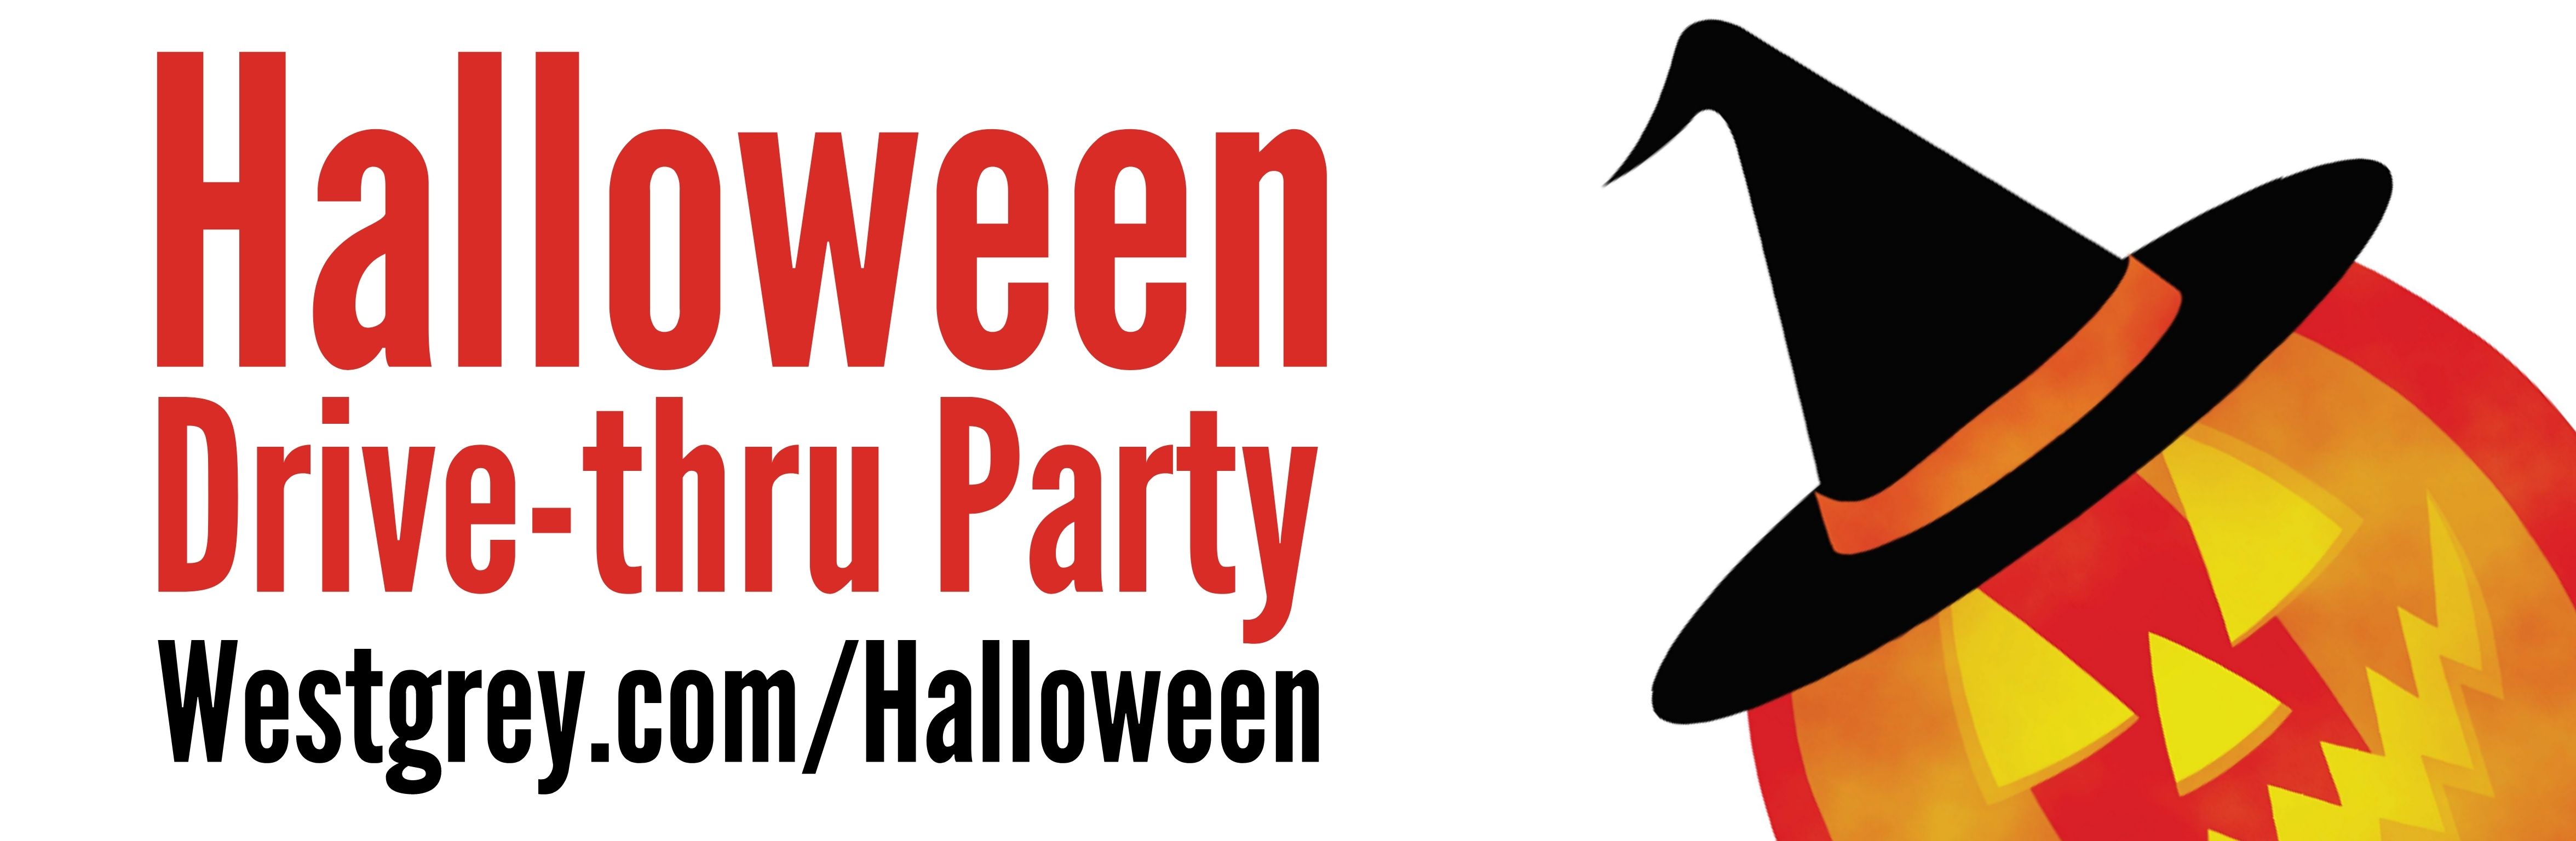 West Grey Drive Thru Halloween party banner with website link www.westgrey.com/Halloween